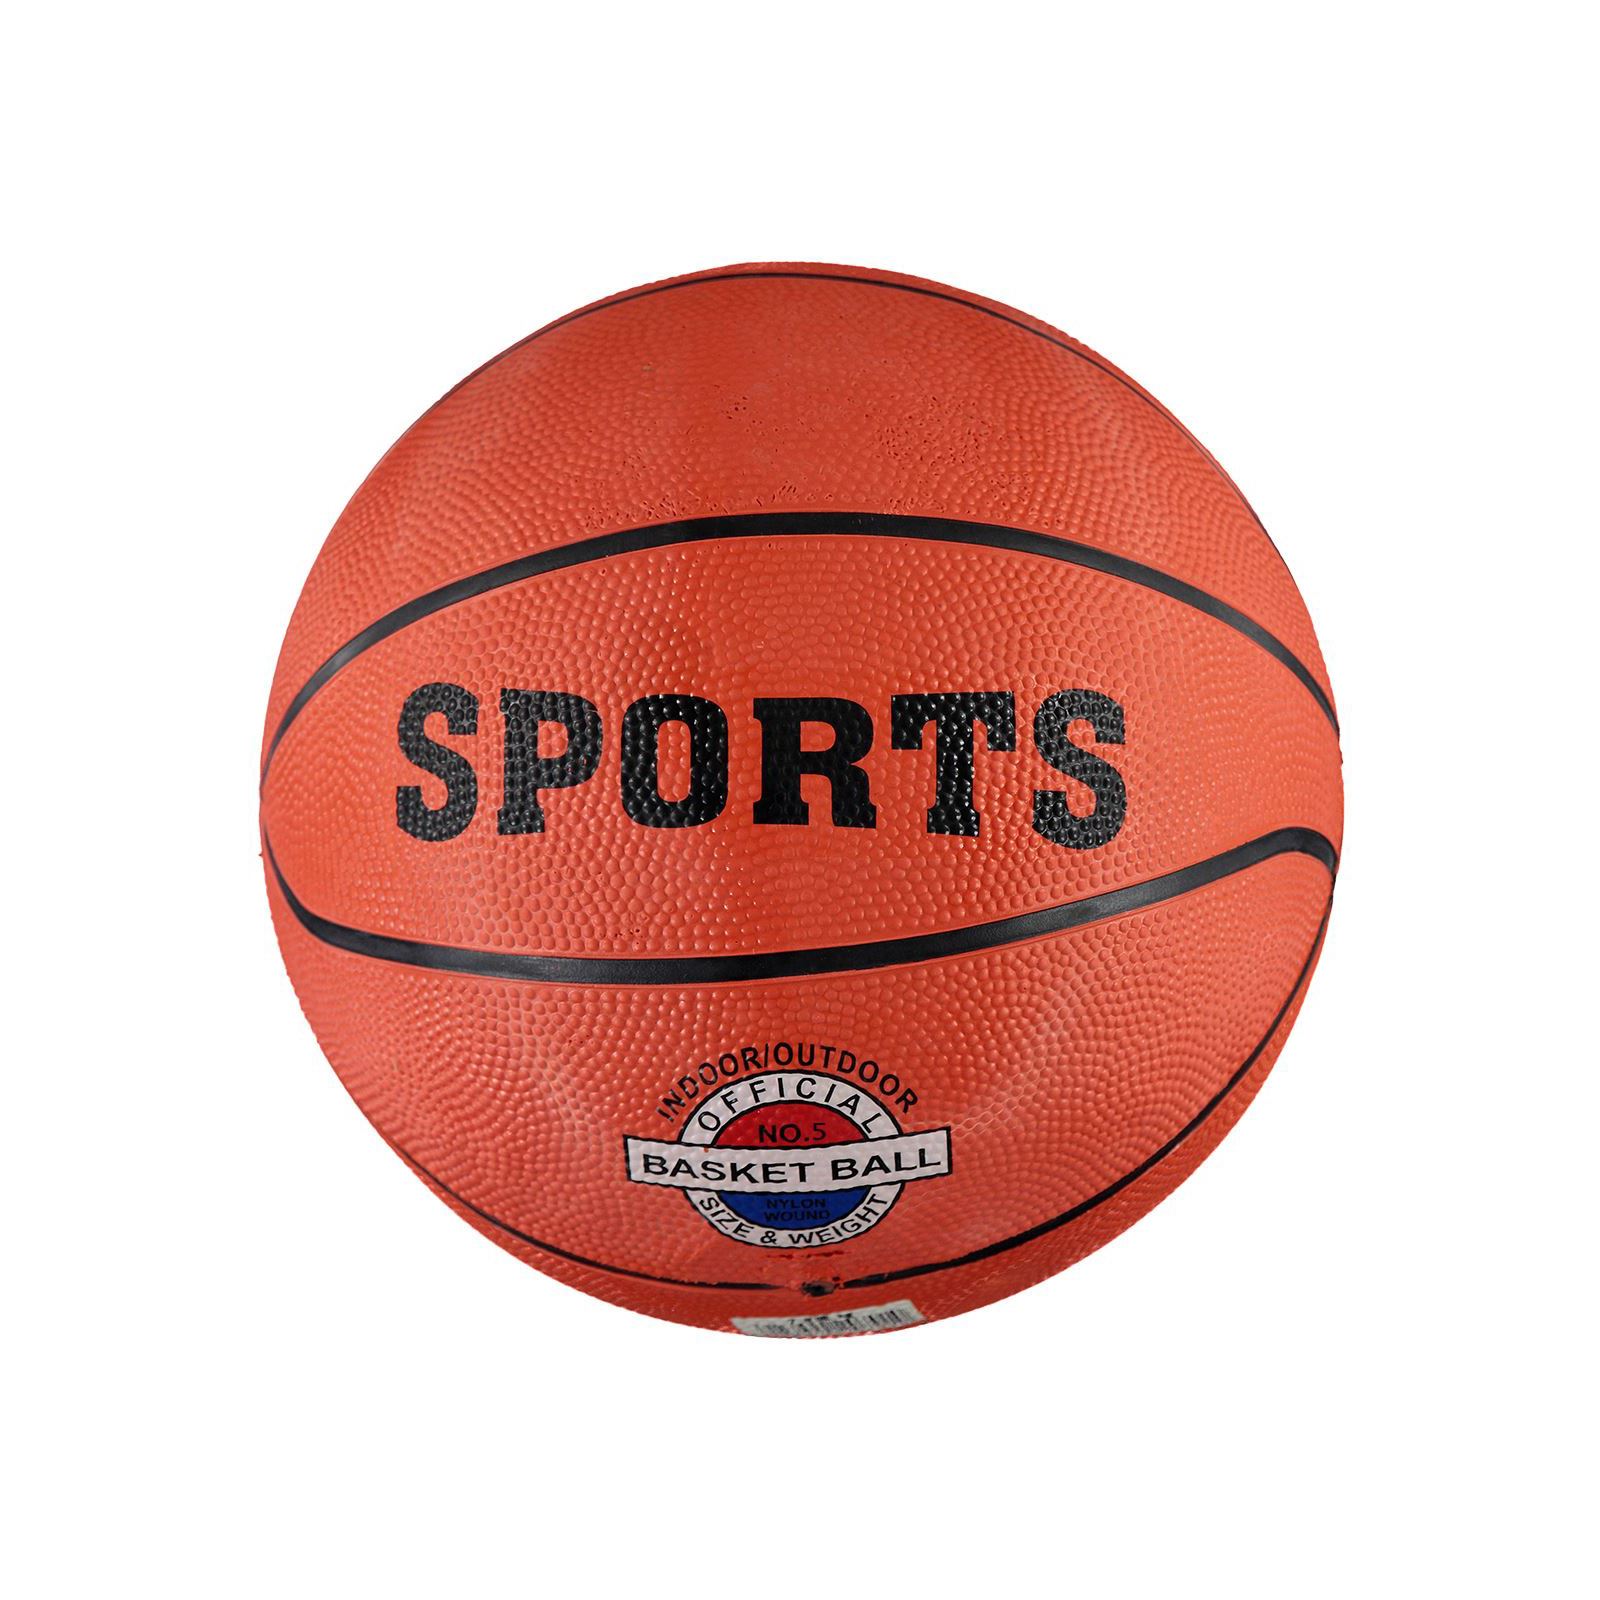 Can Oyuncak Basketbol Topu Turuncu